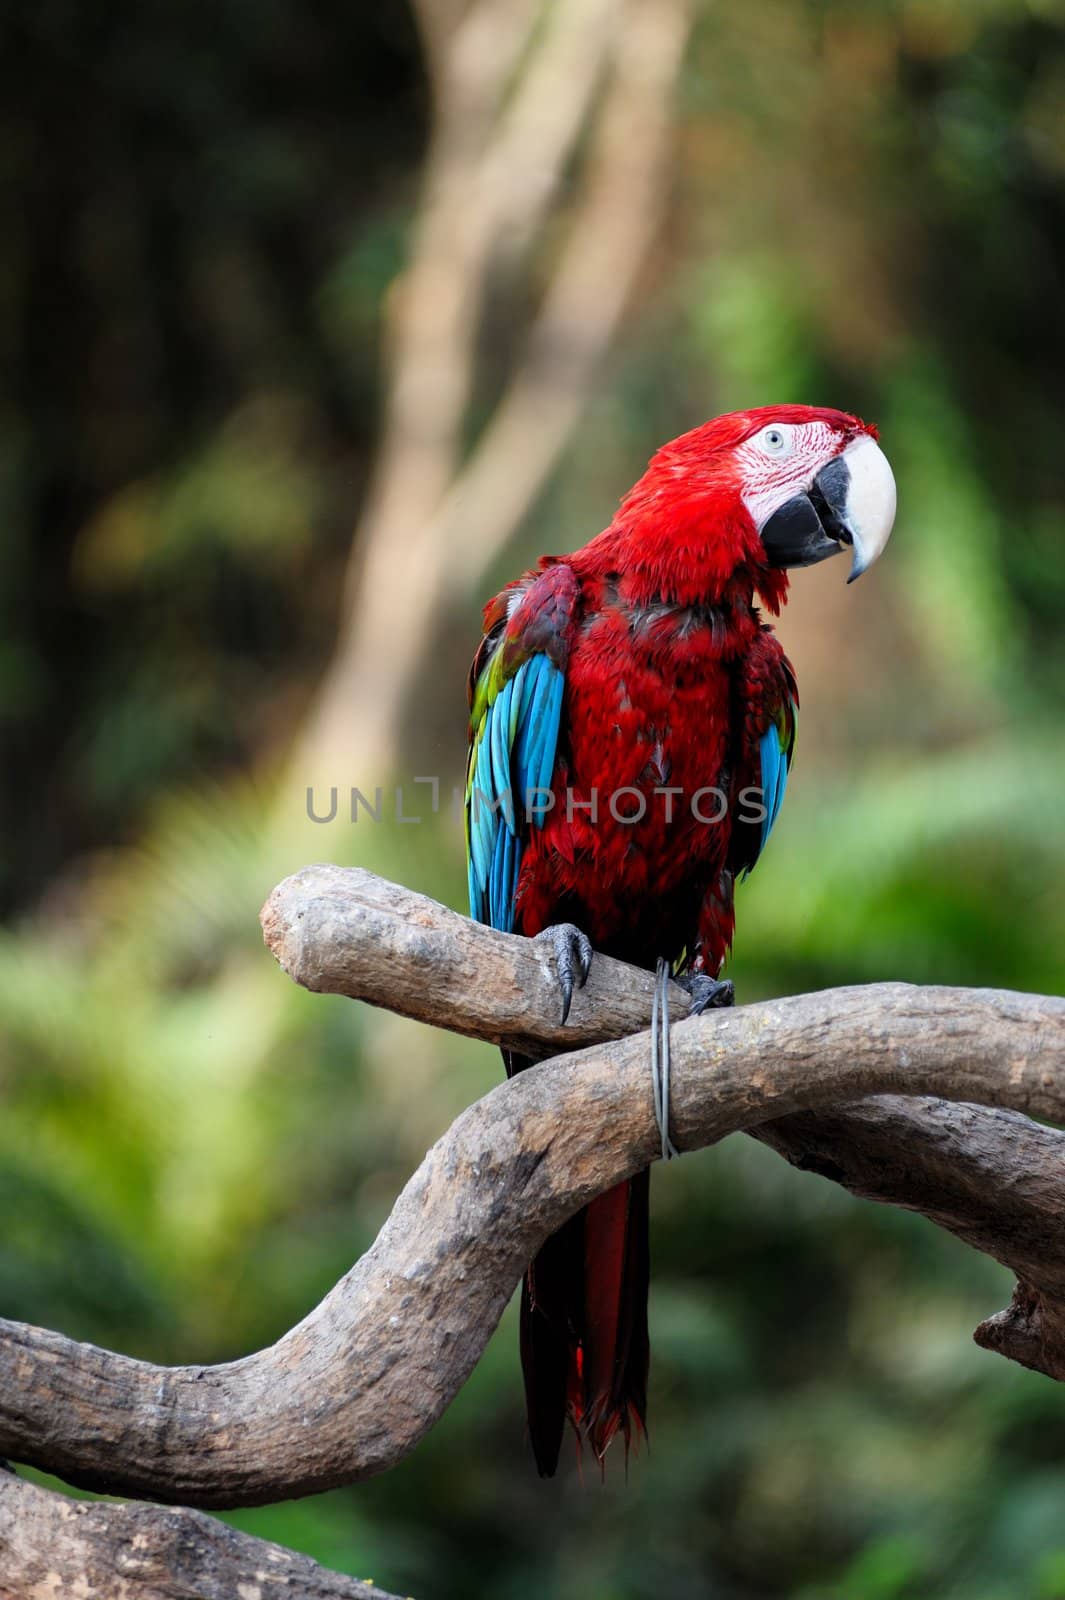 Parrot bird by raywoo